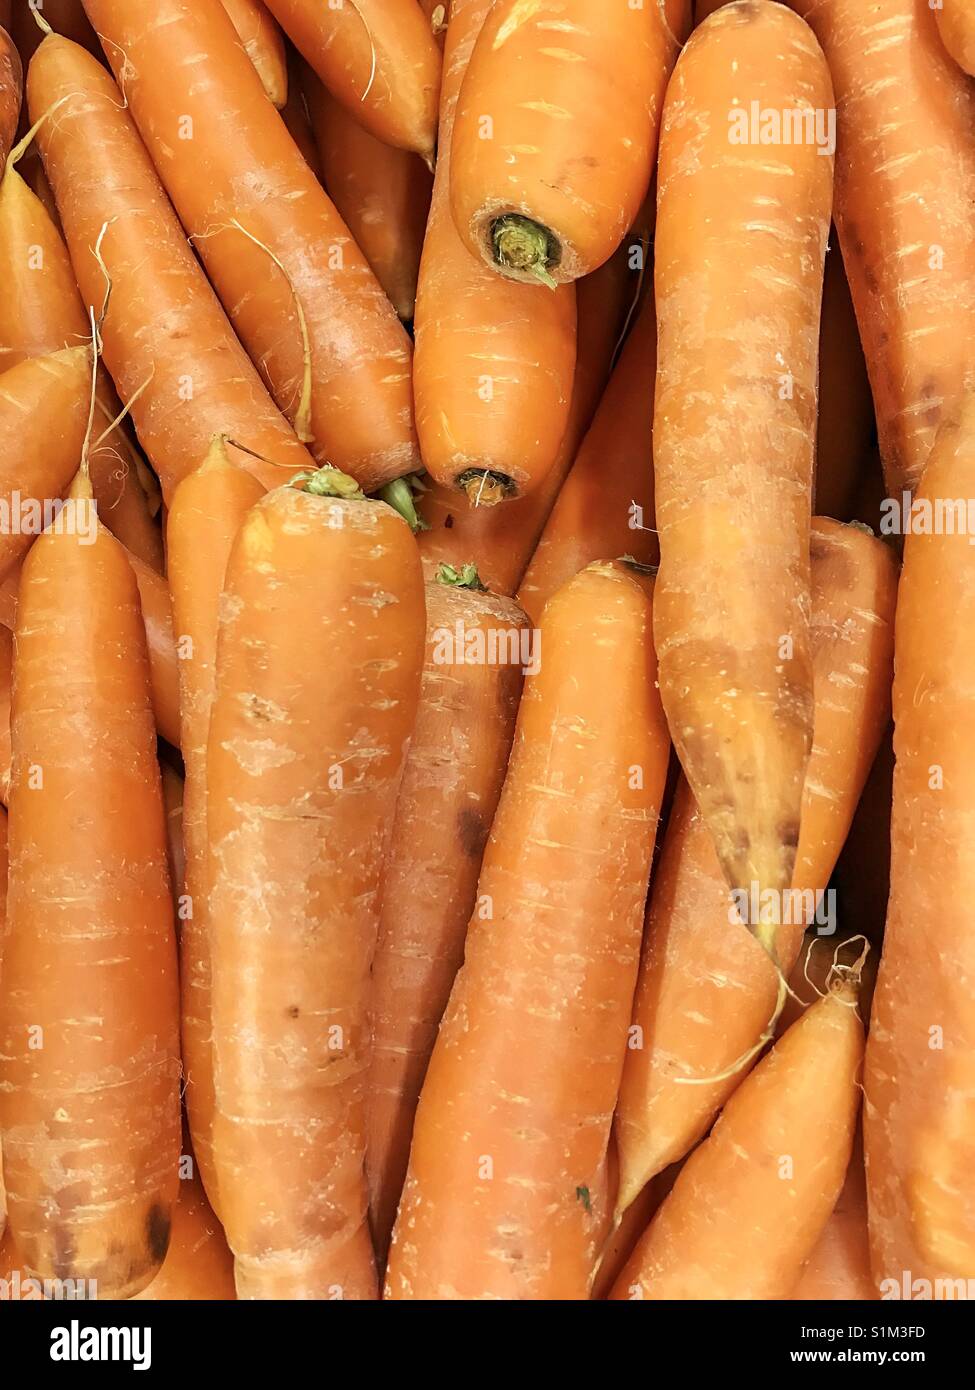 Carrots on a market shelf Stock Photo